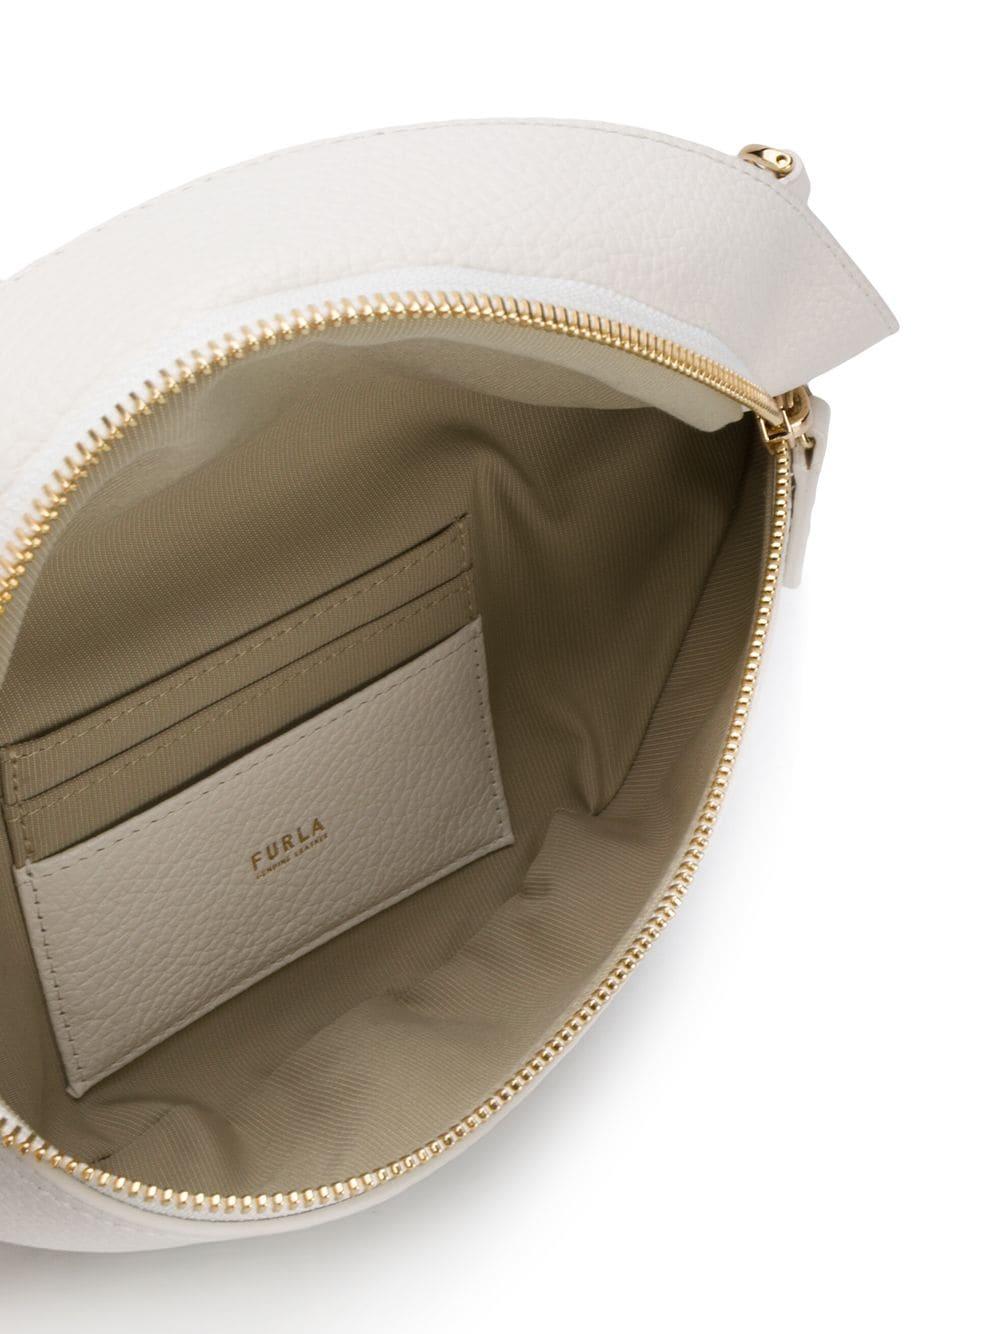 Furla Leather Piper Xl Belt Bag in White | Lyst